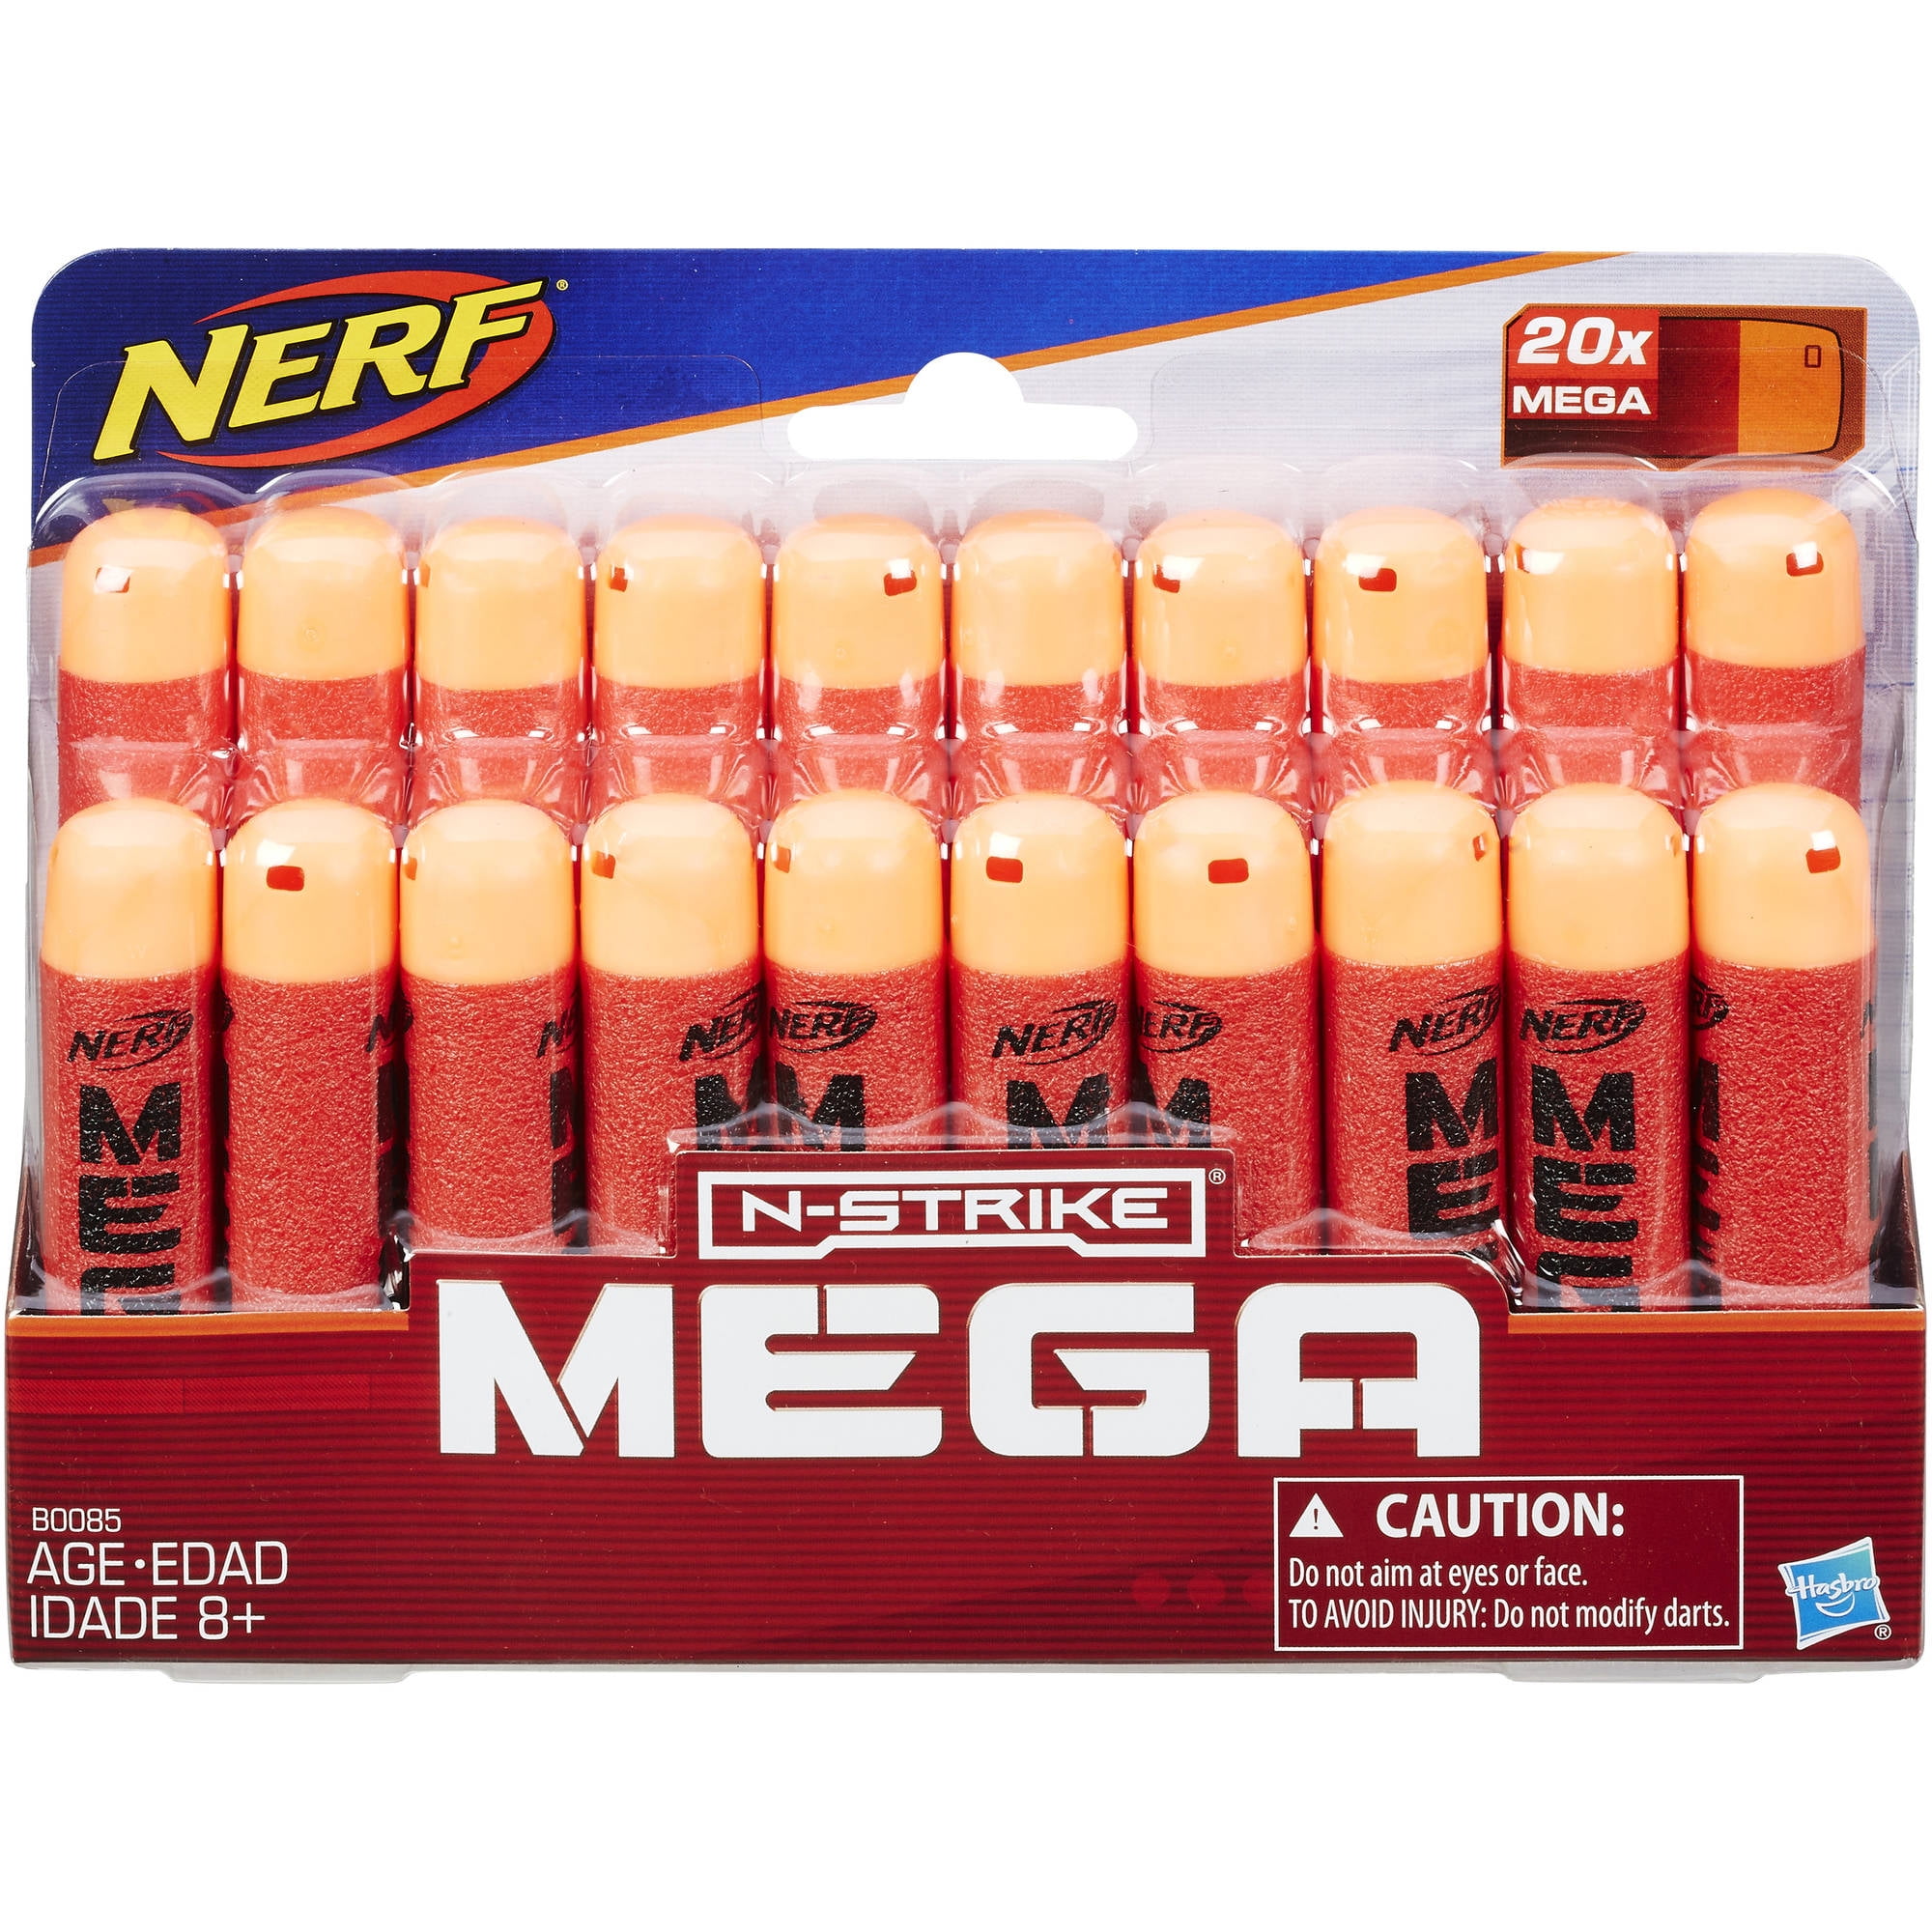 NEW Nerf B0085 Official N-Strike Mega Dart Refill 20 Pack Extra Ammo Fun Kid Toy 